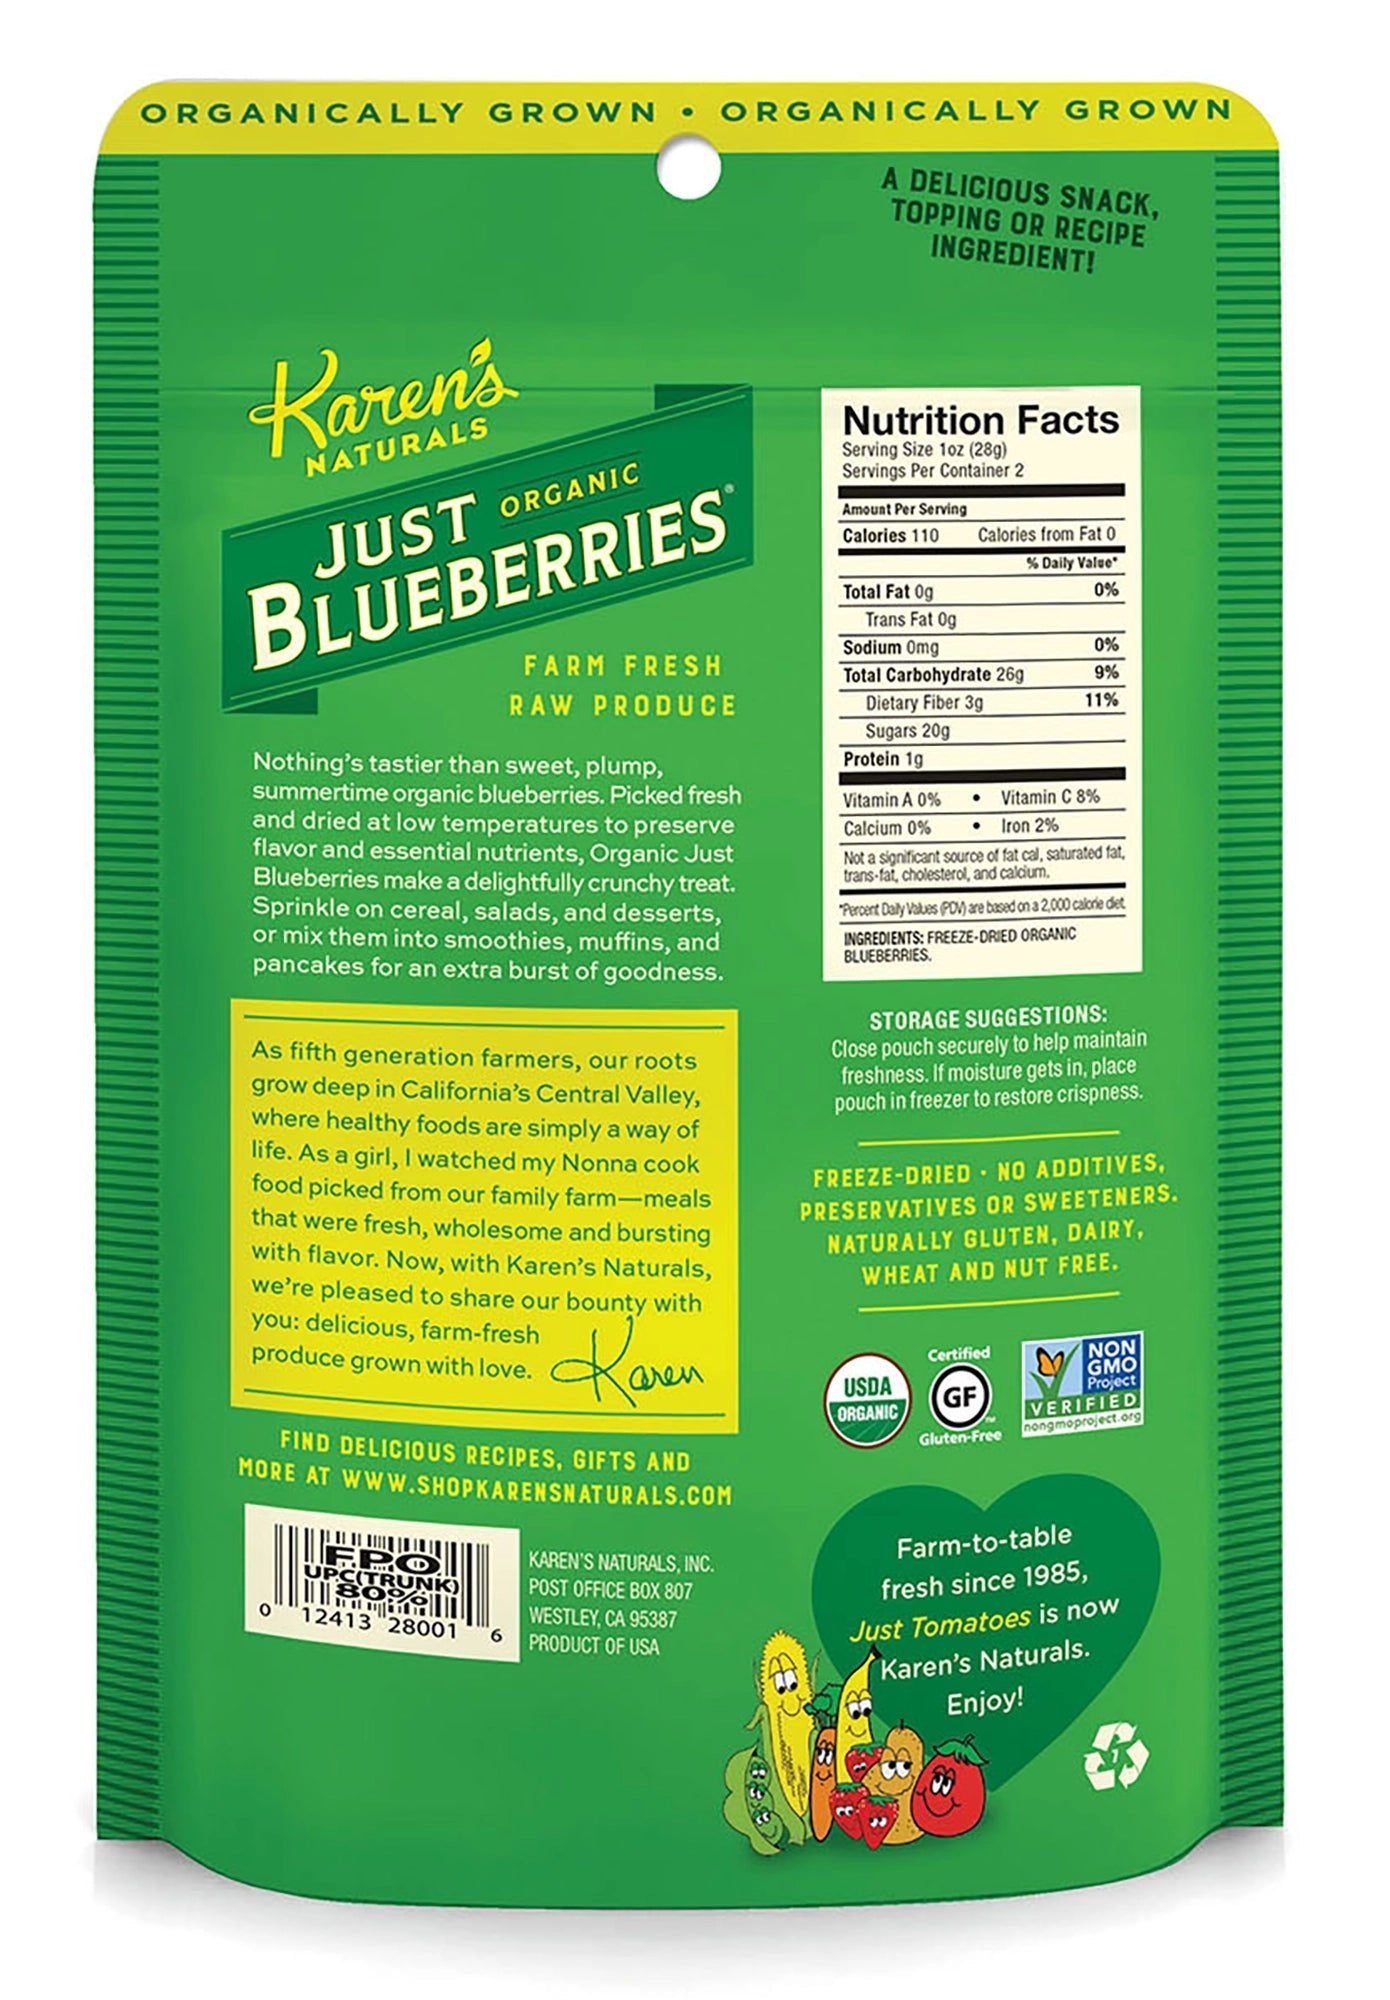 Organic Just Blueberries - Karen's Naturals